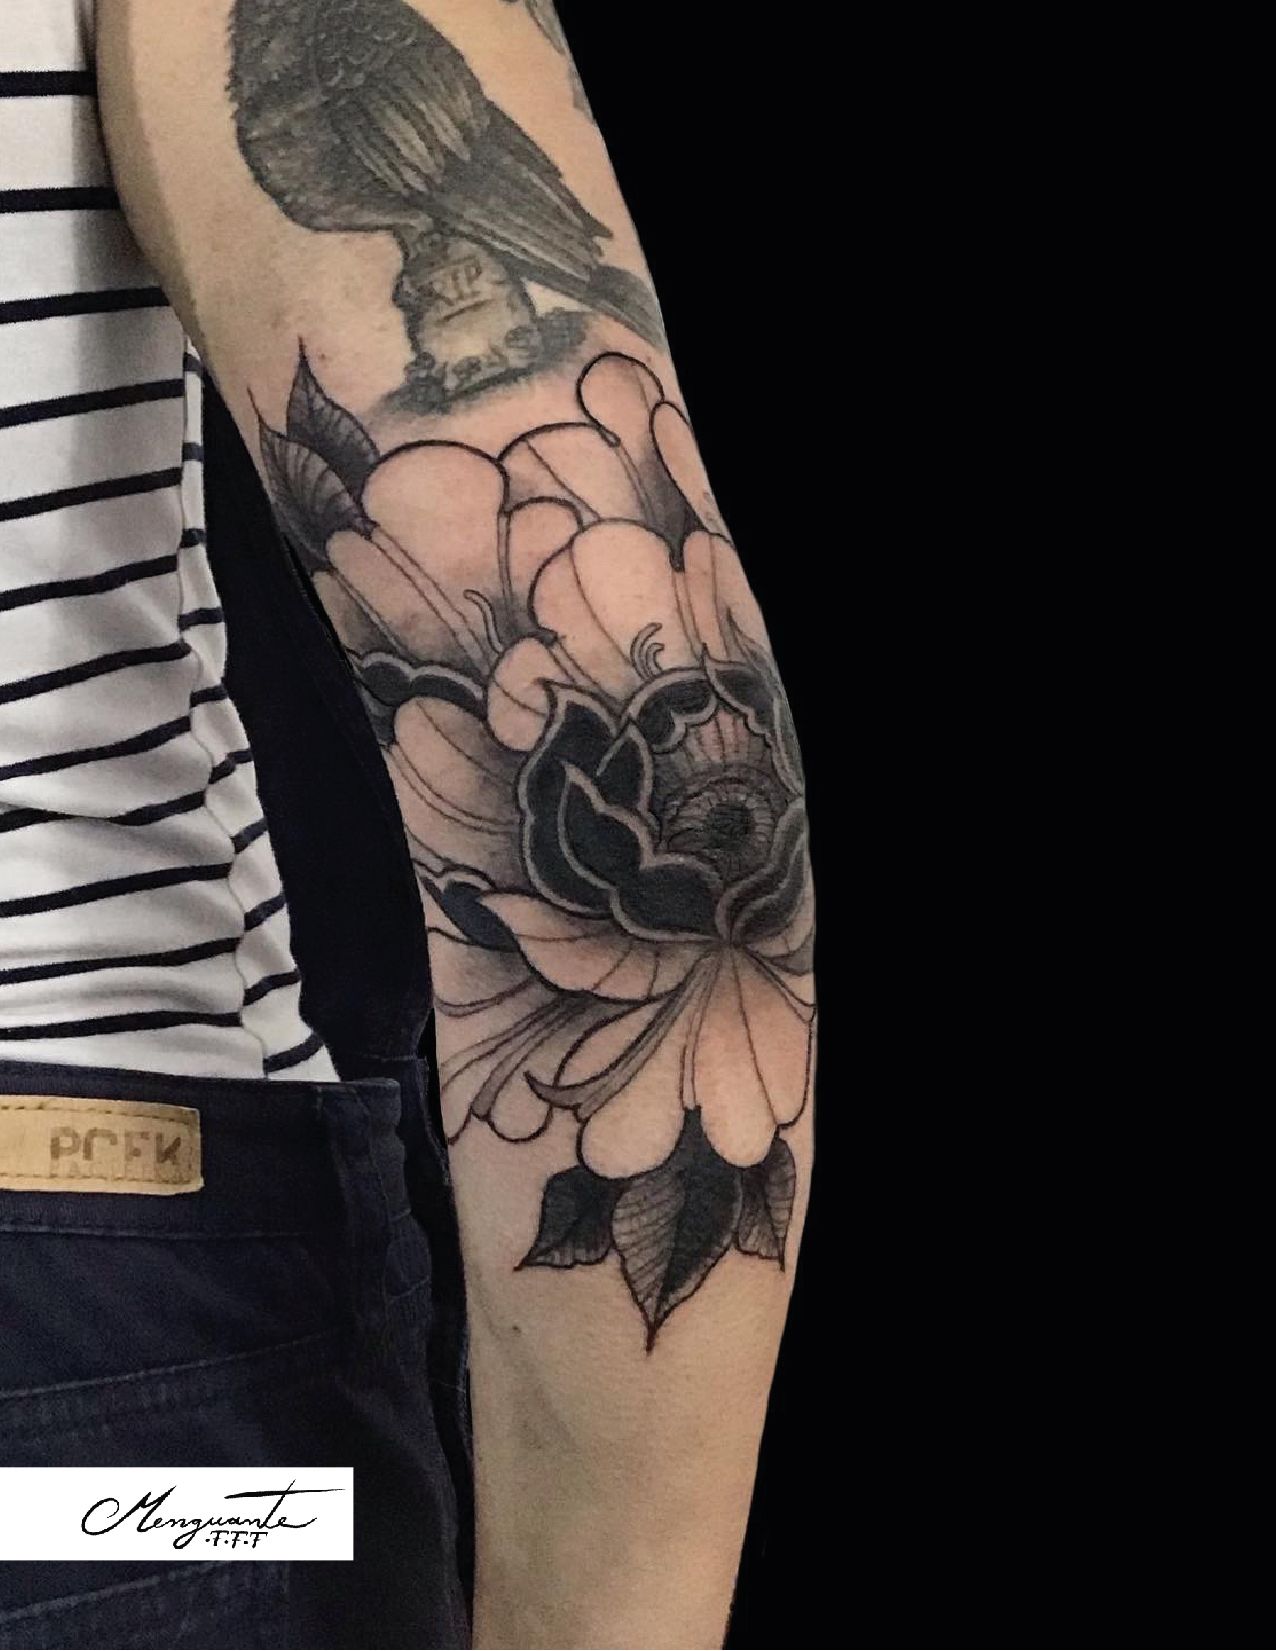 Tattoo uploaded by Sebastian Grillo (menguante_ttt) • tatuaje flor en codo  • Tattoodo